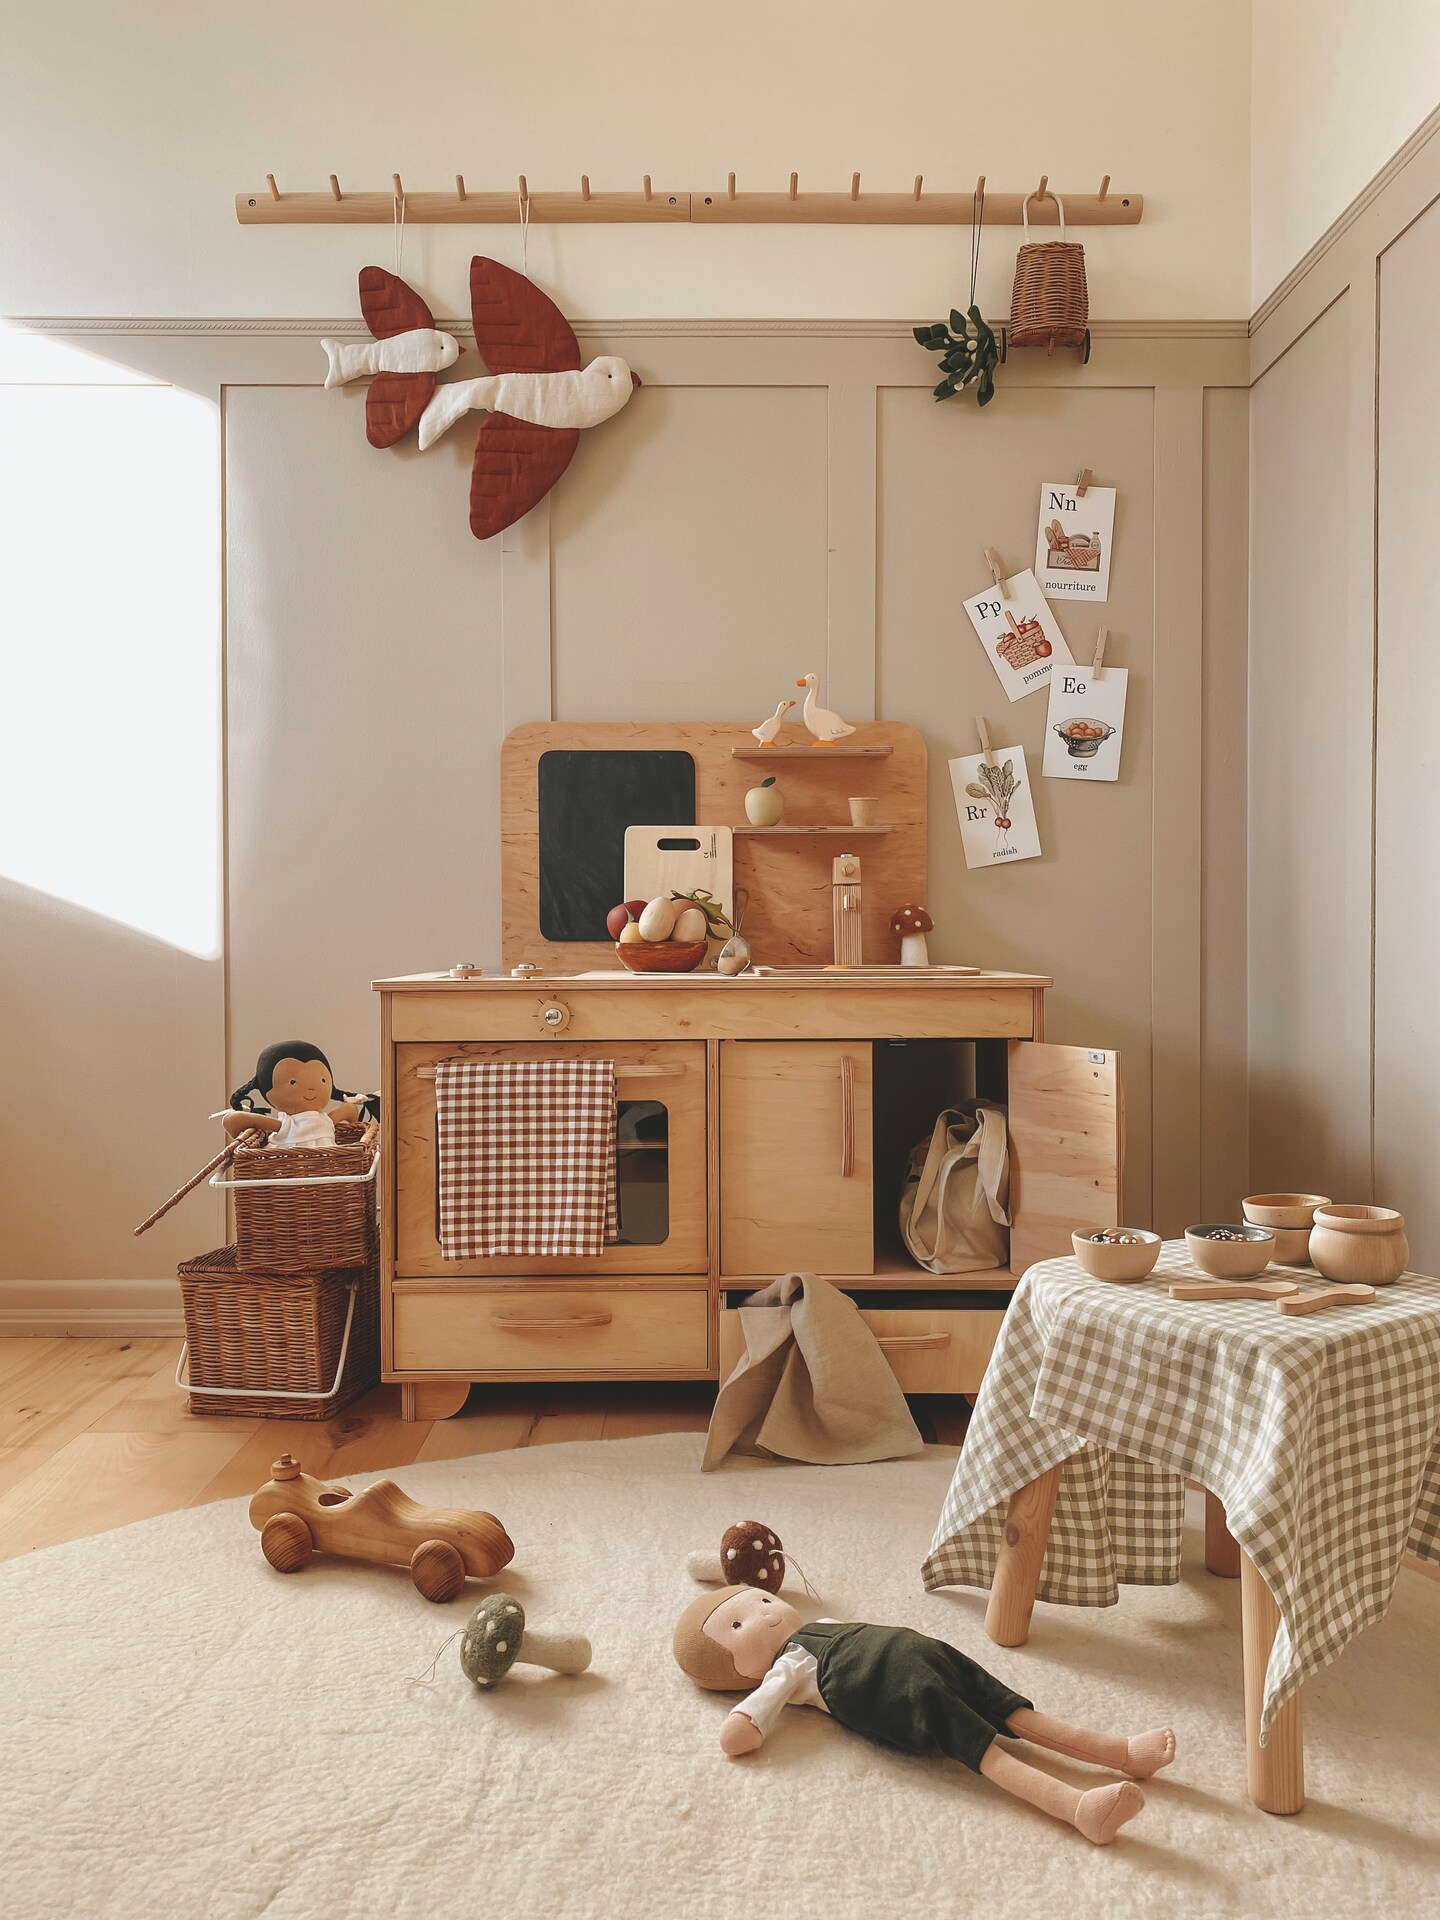 Play Kitchen Set, Montessori Furniture, Pretend Play Kitchen Wooden, Girl  or Boy Birthday Gift, Toy Kitchen, Gifts for Kids, Playroom Decor 